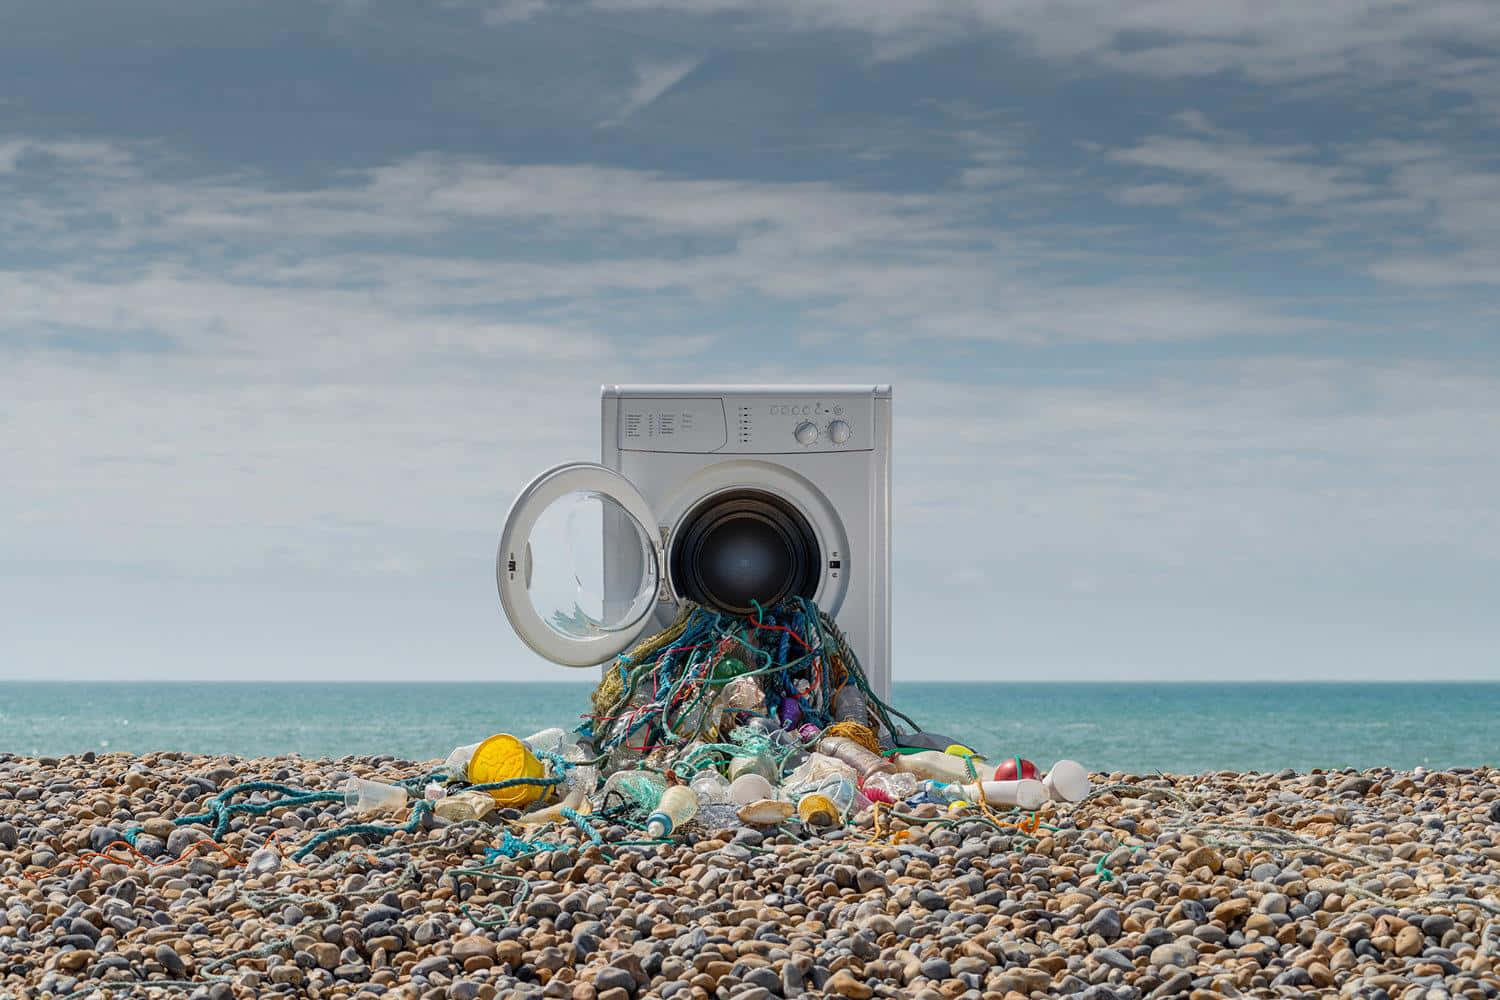 Washing Machine Ocean Pollution.jpg Wallpaper